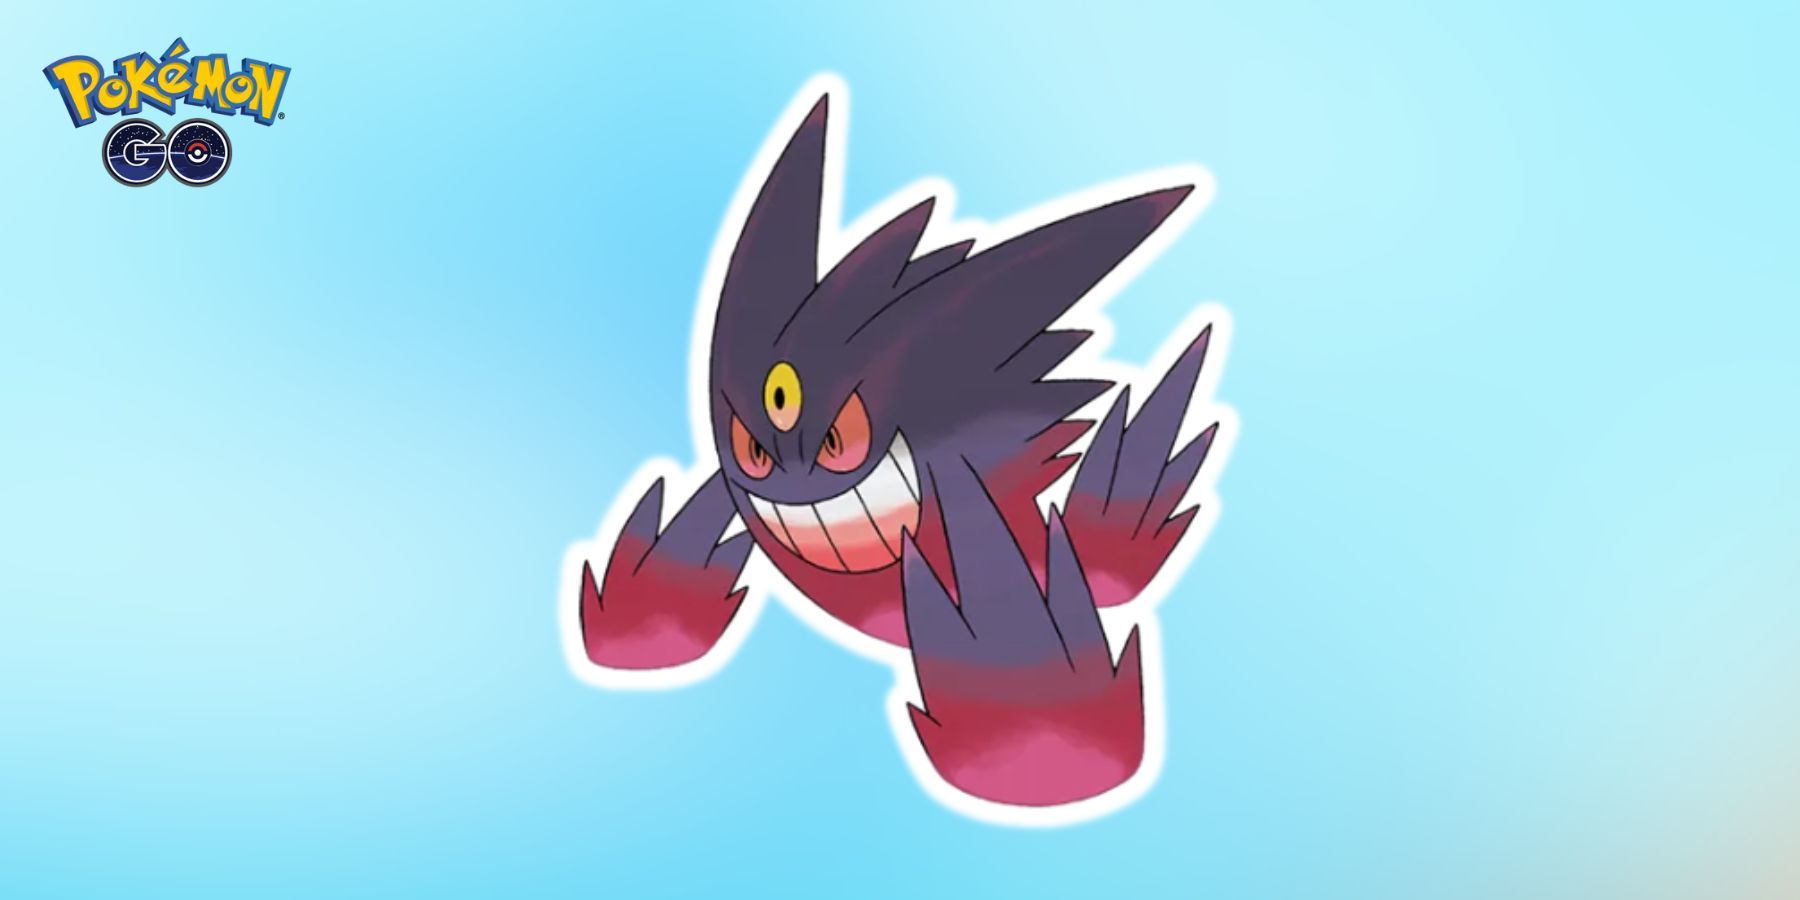 Gengar Pokémon- How to catch, Best Moveset, Evolution